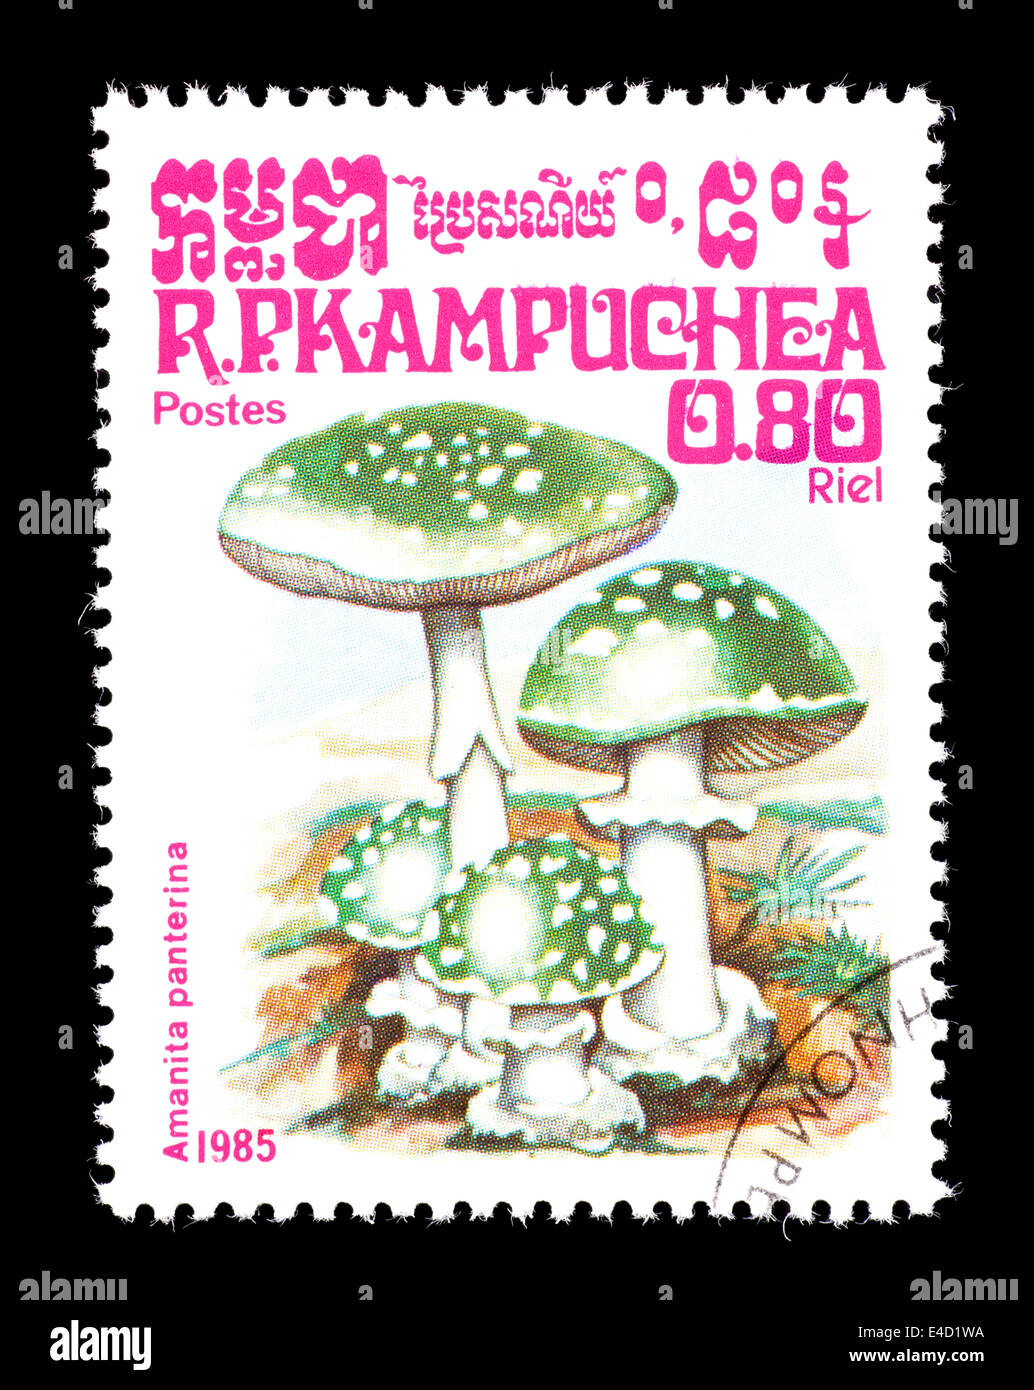 Postage stamp from Cambodia (Kampuchea) depicting panther cap or false blusher mushrooms (Amanita pantherina) Stock Photo